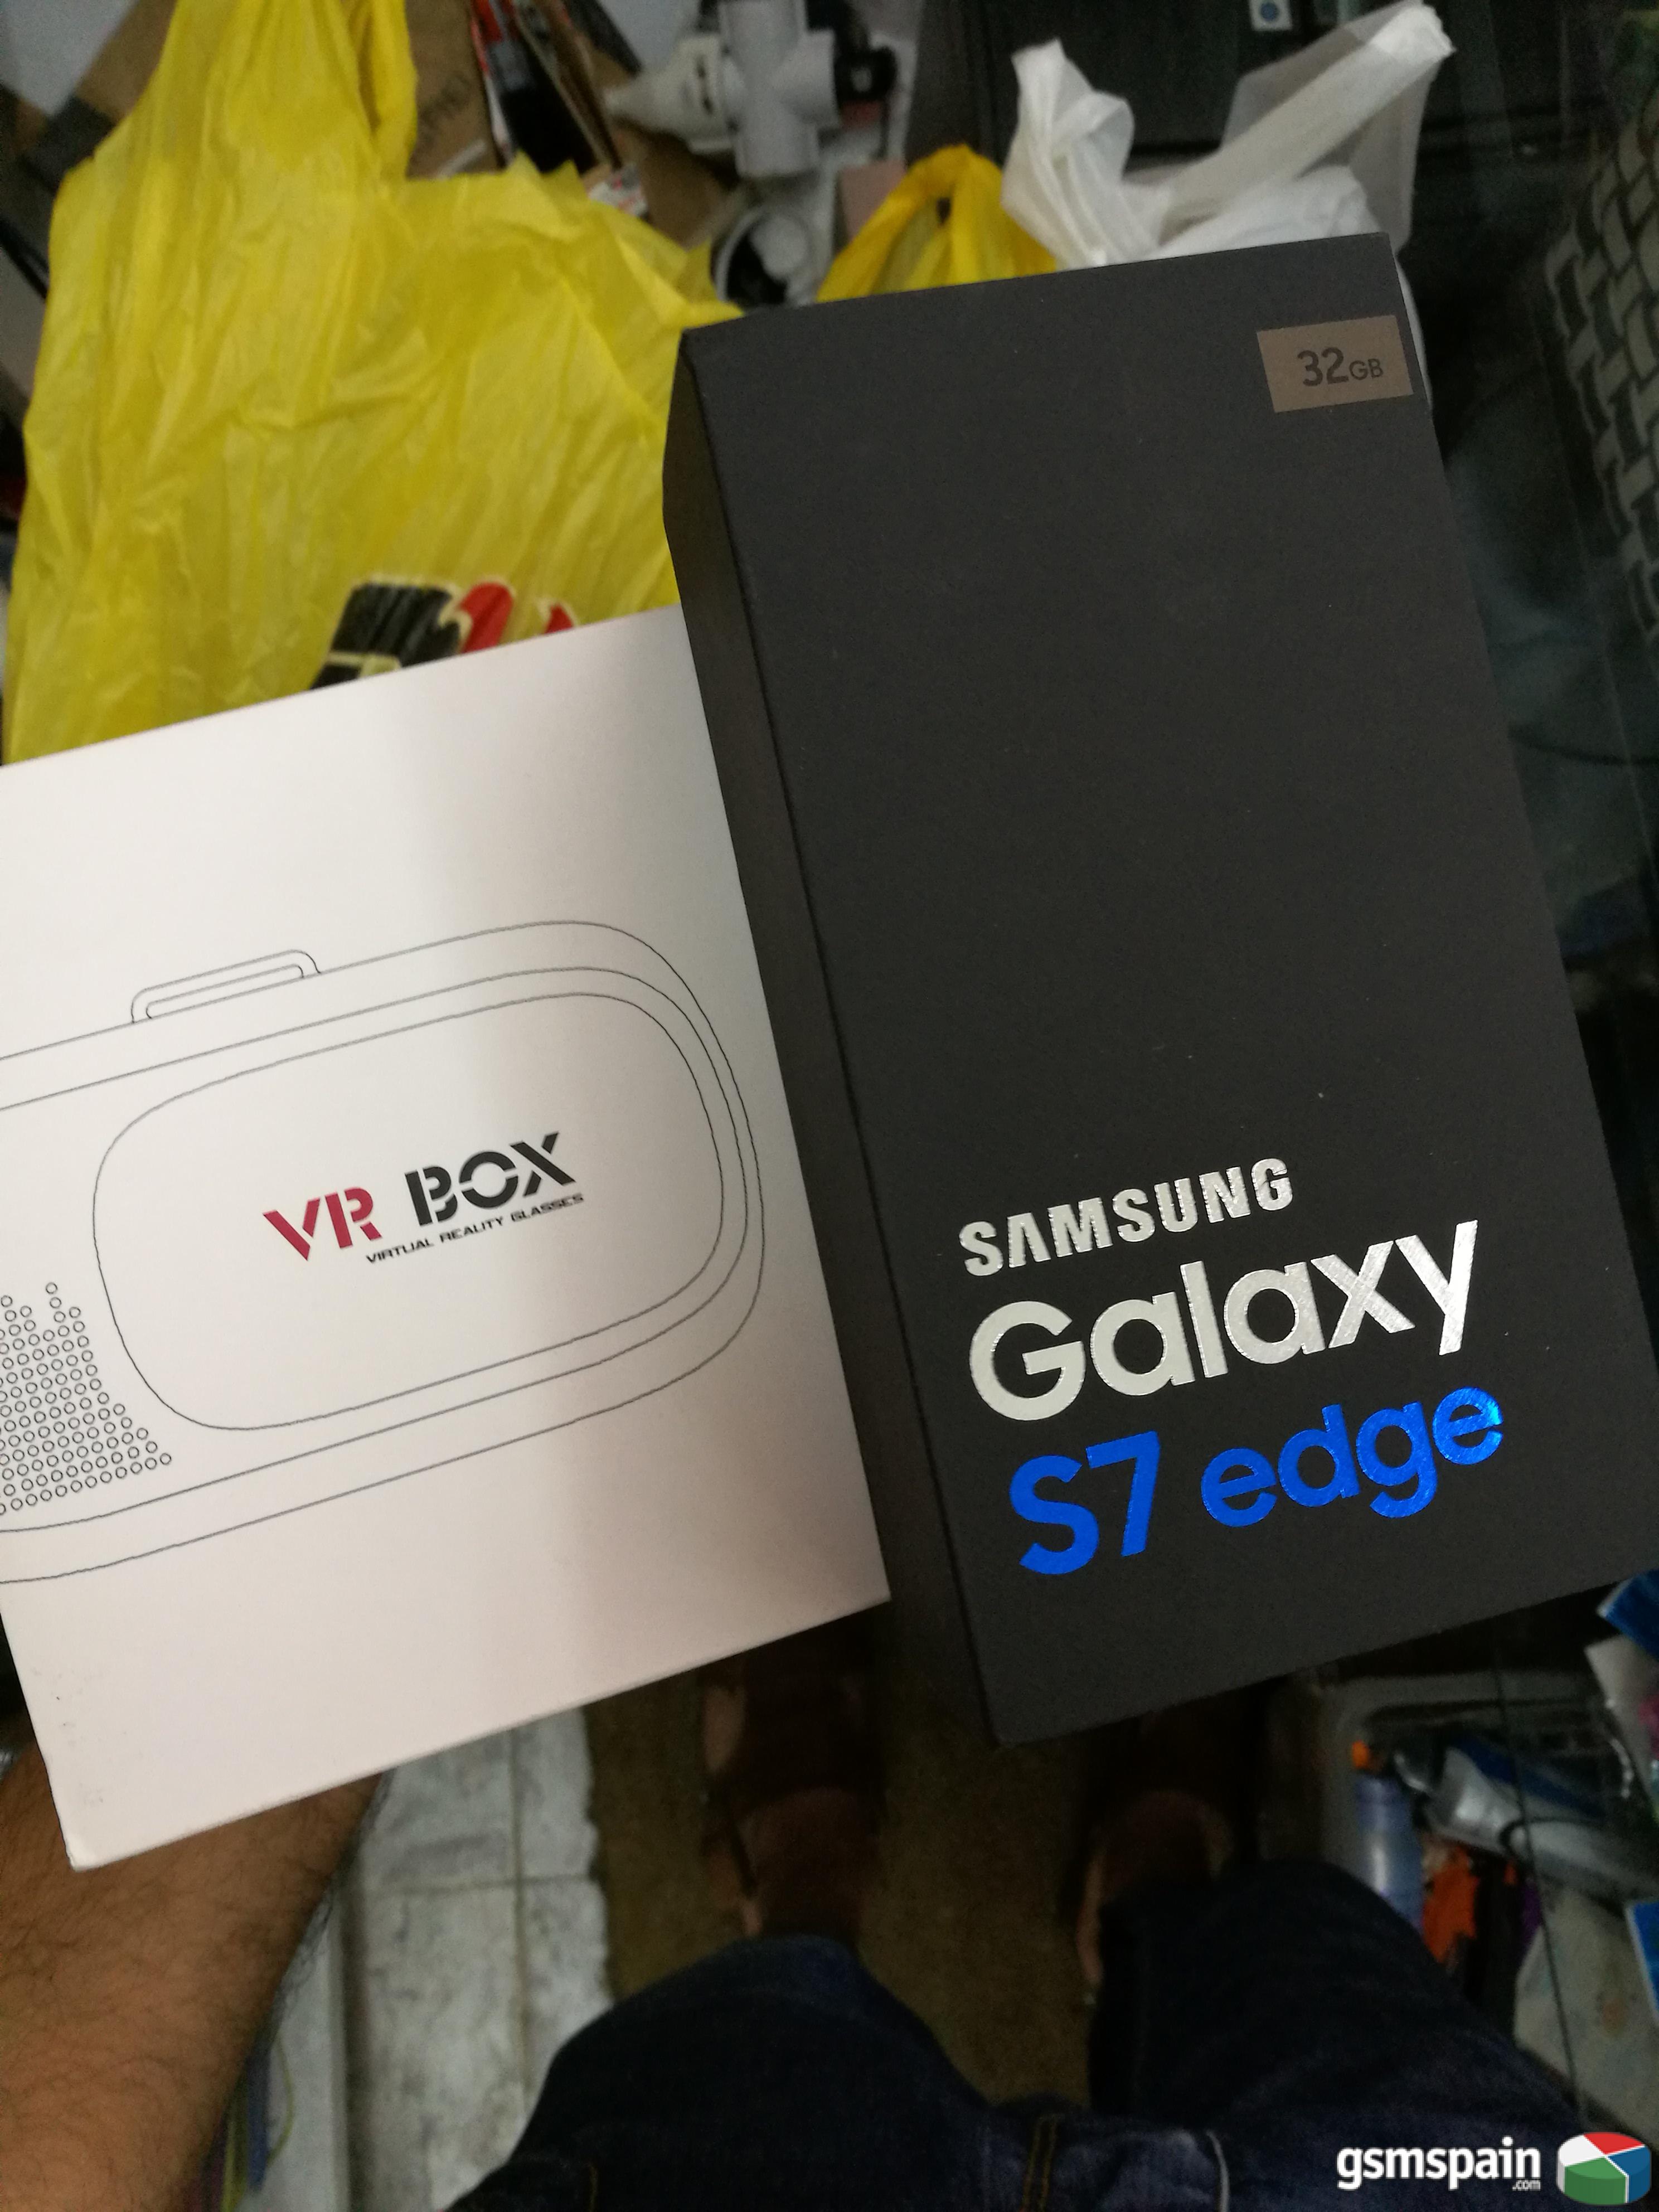 [VENDO] Samsung galaxy S7 EDGE Gold NUEVO ms GAFAS VR BOX 520!!!!!